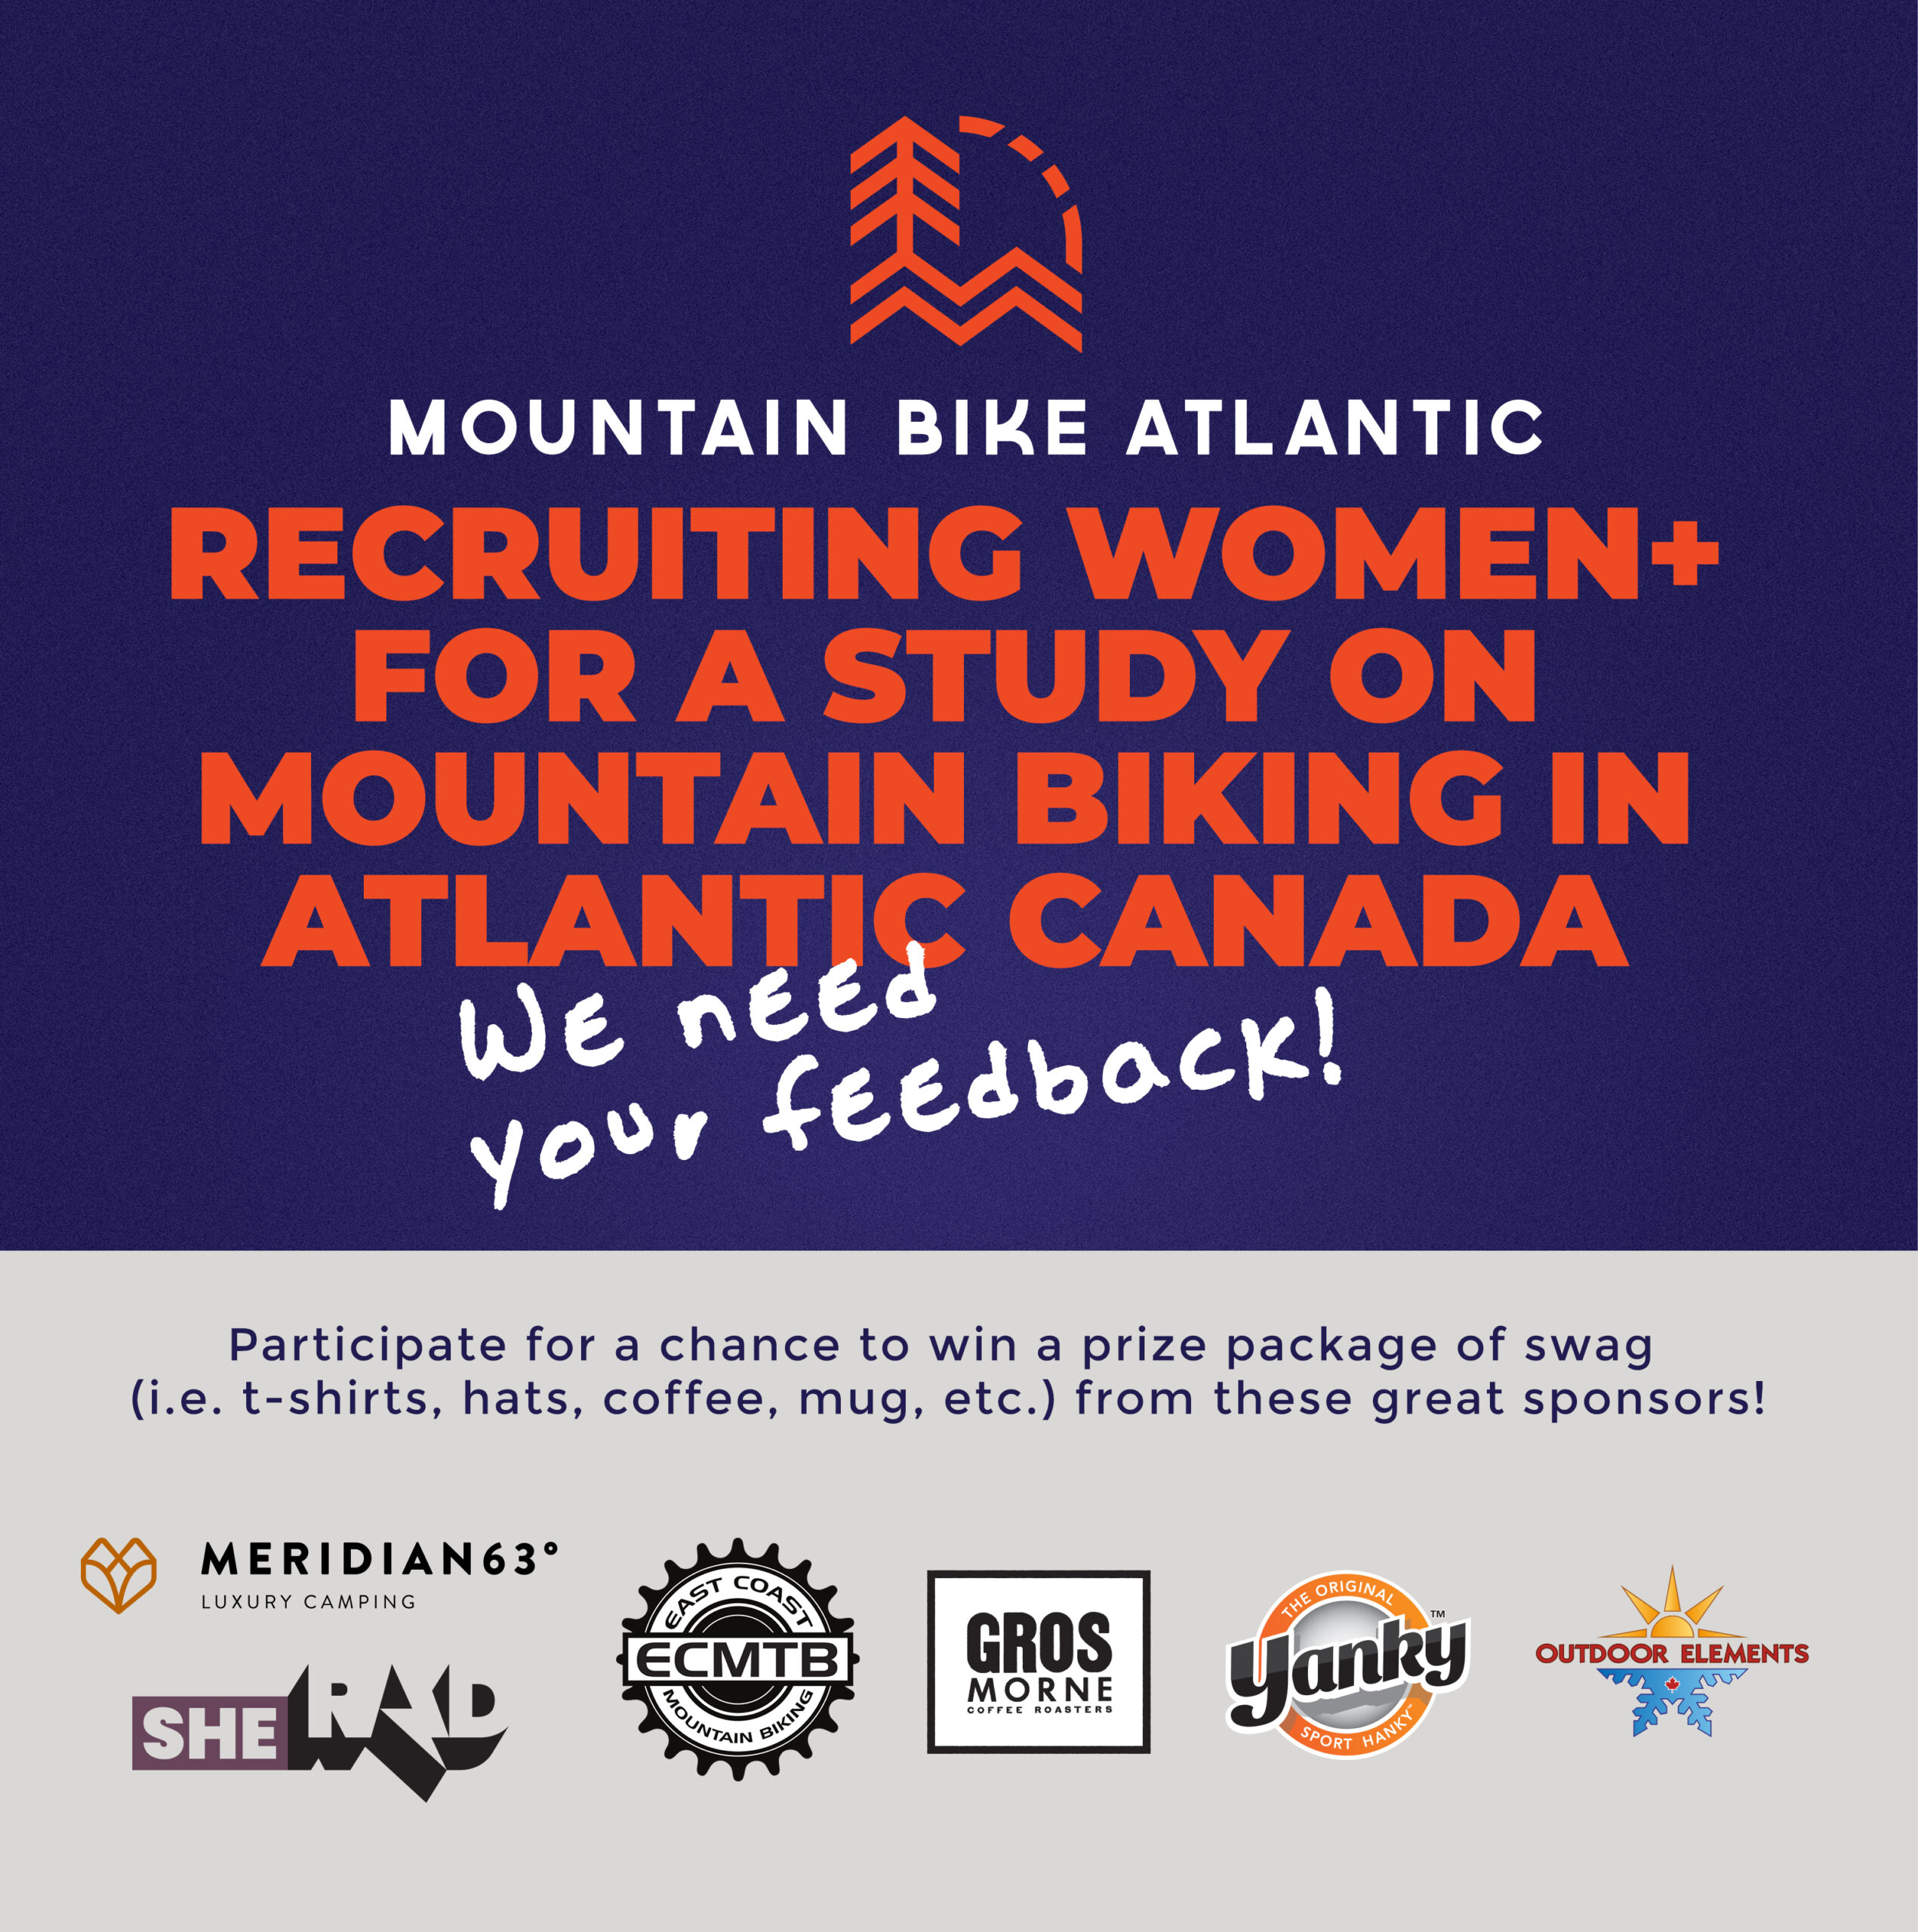 MTB Atlantic recruiting Women+ for a study on Mountain Biking in Atlantic Canada